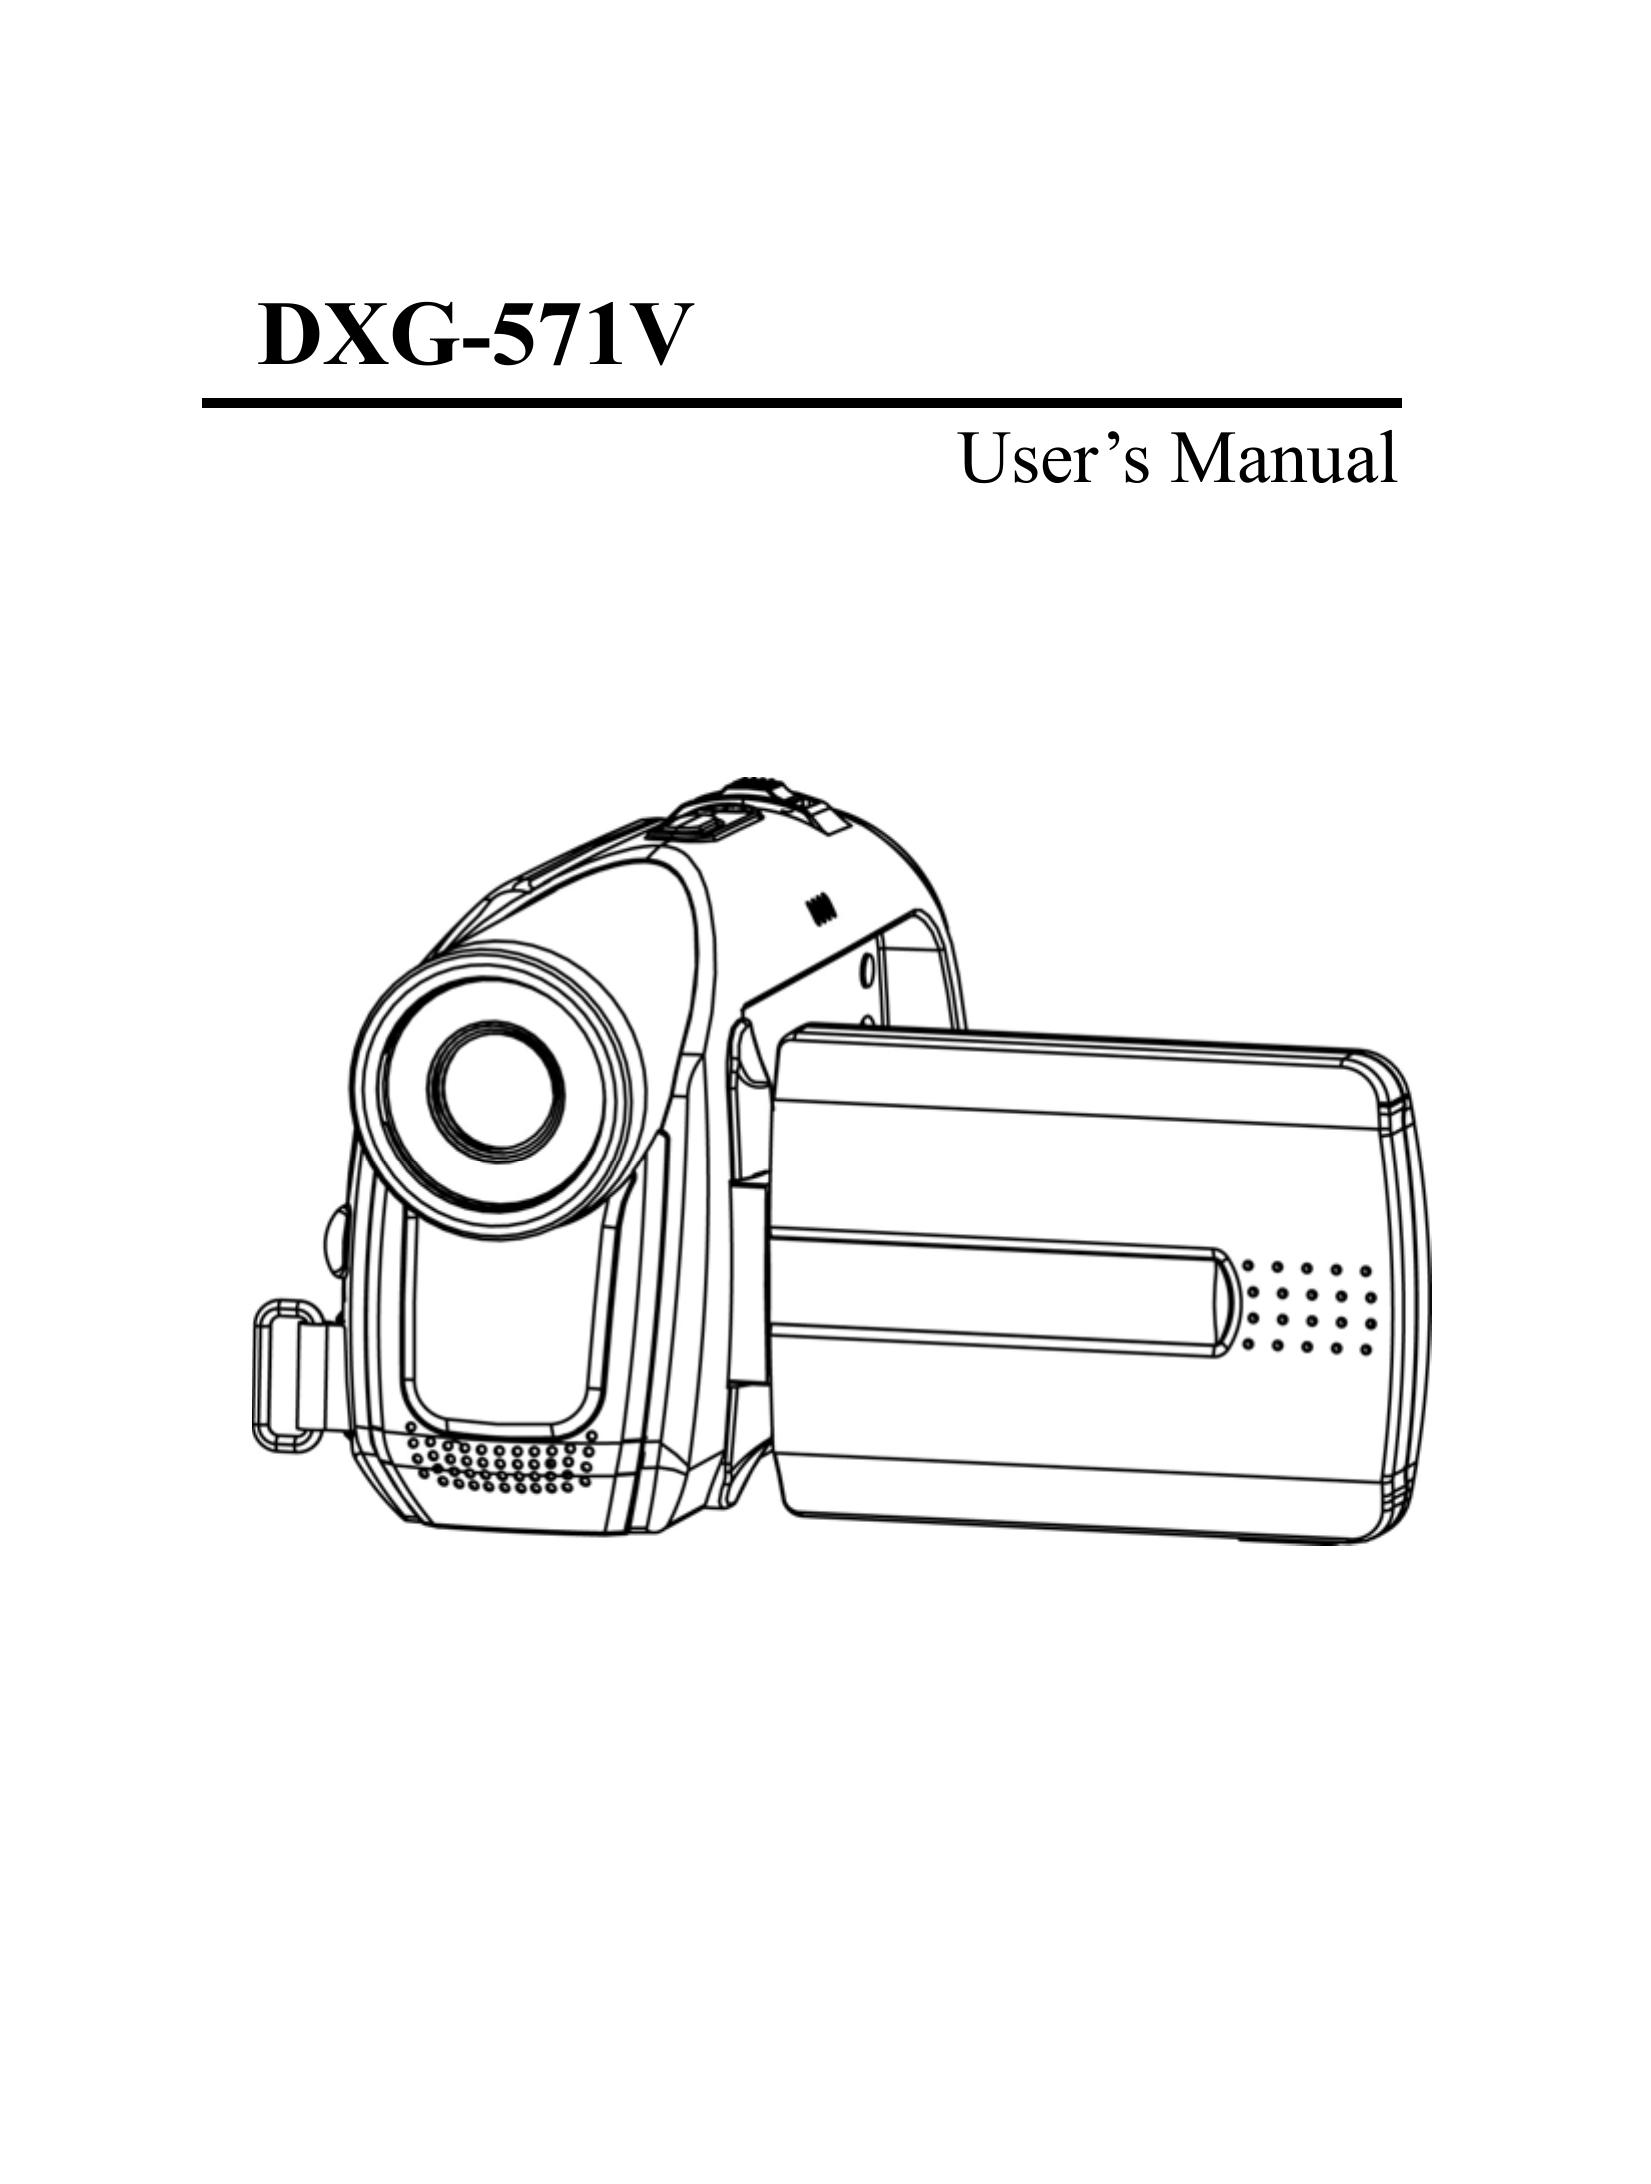 DXG Technology DXG-571V Camcorder User Manual